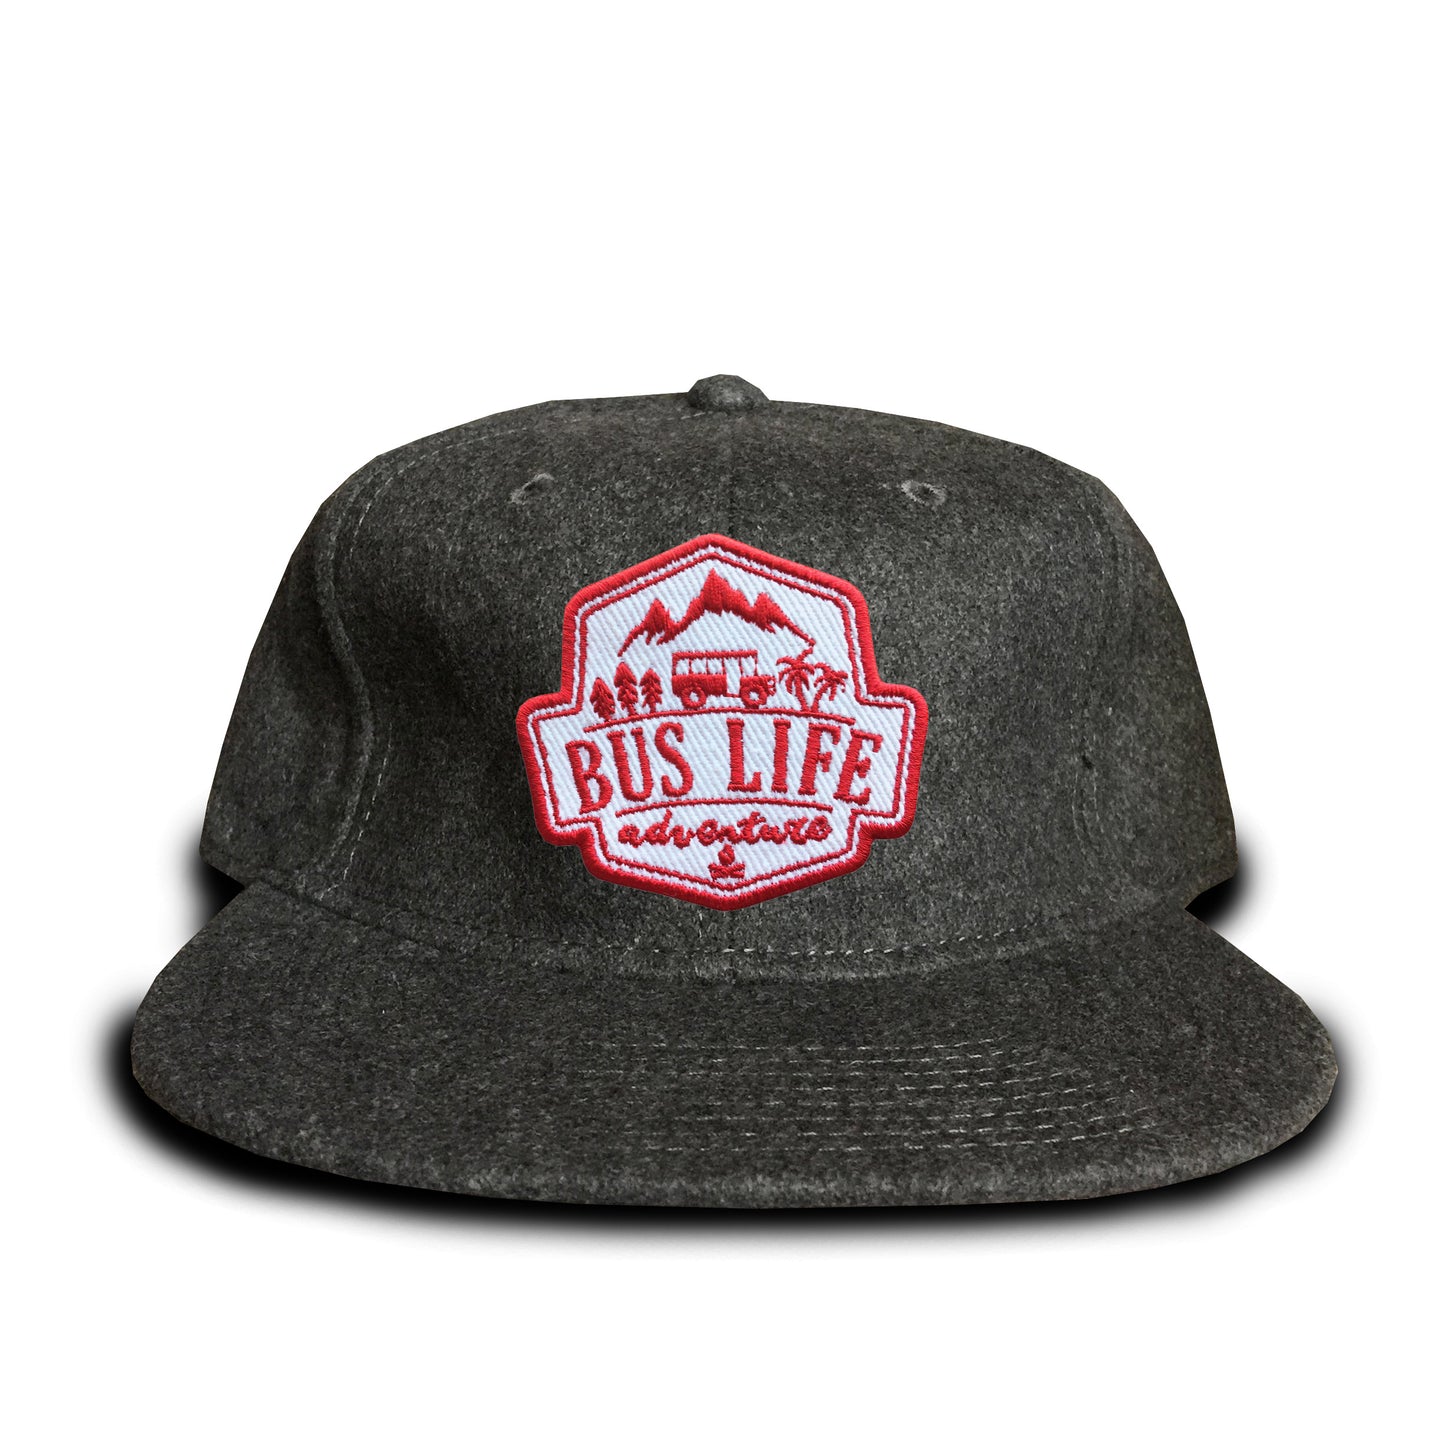 Bus Life Adventure Logo - Embroidered Patch Felt Hat/Flat Brim